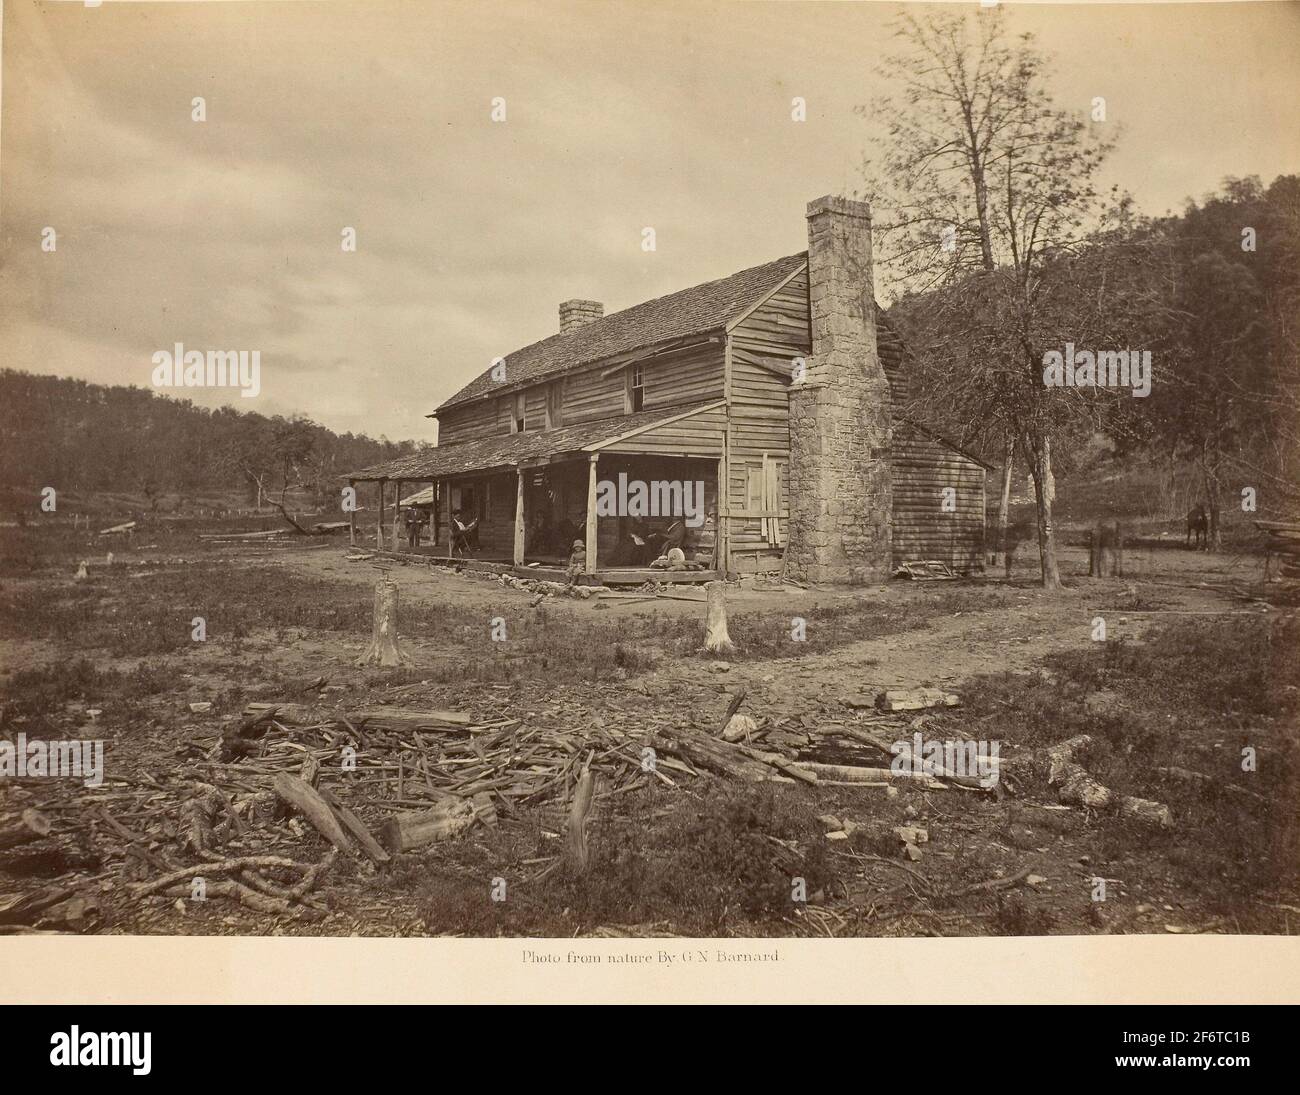 Author: George N. Barnard. The John Ross House, Ringold, GA - 1866 - George N. Barnard American, 1819'1902. Albumen print, plate 16 from the album Stock Photo